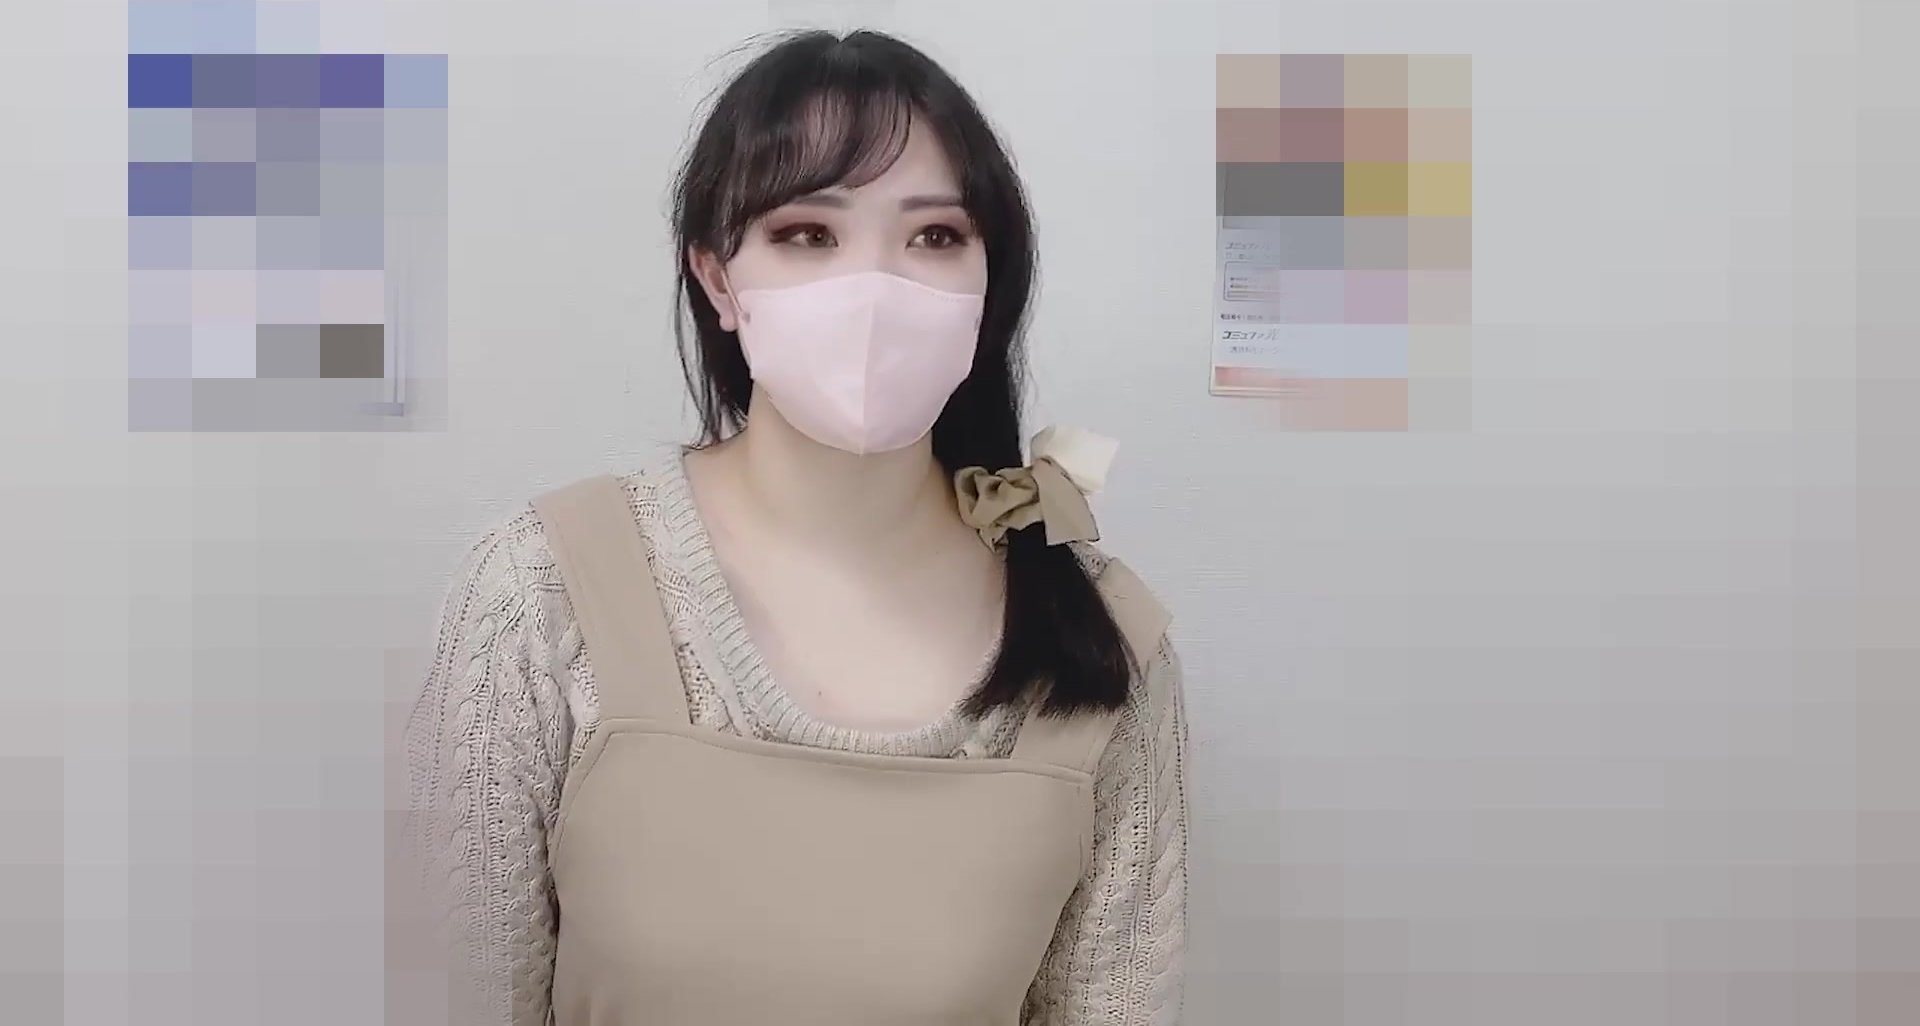 Japanese Ladies Upskirt & Breast - video 5